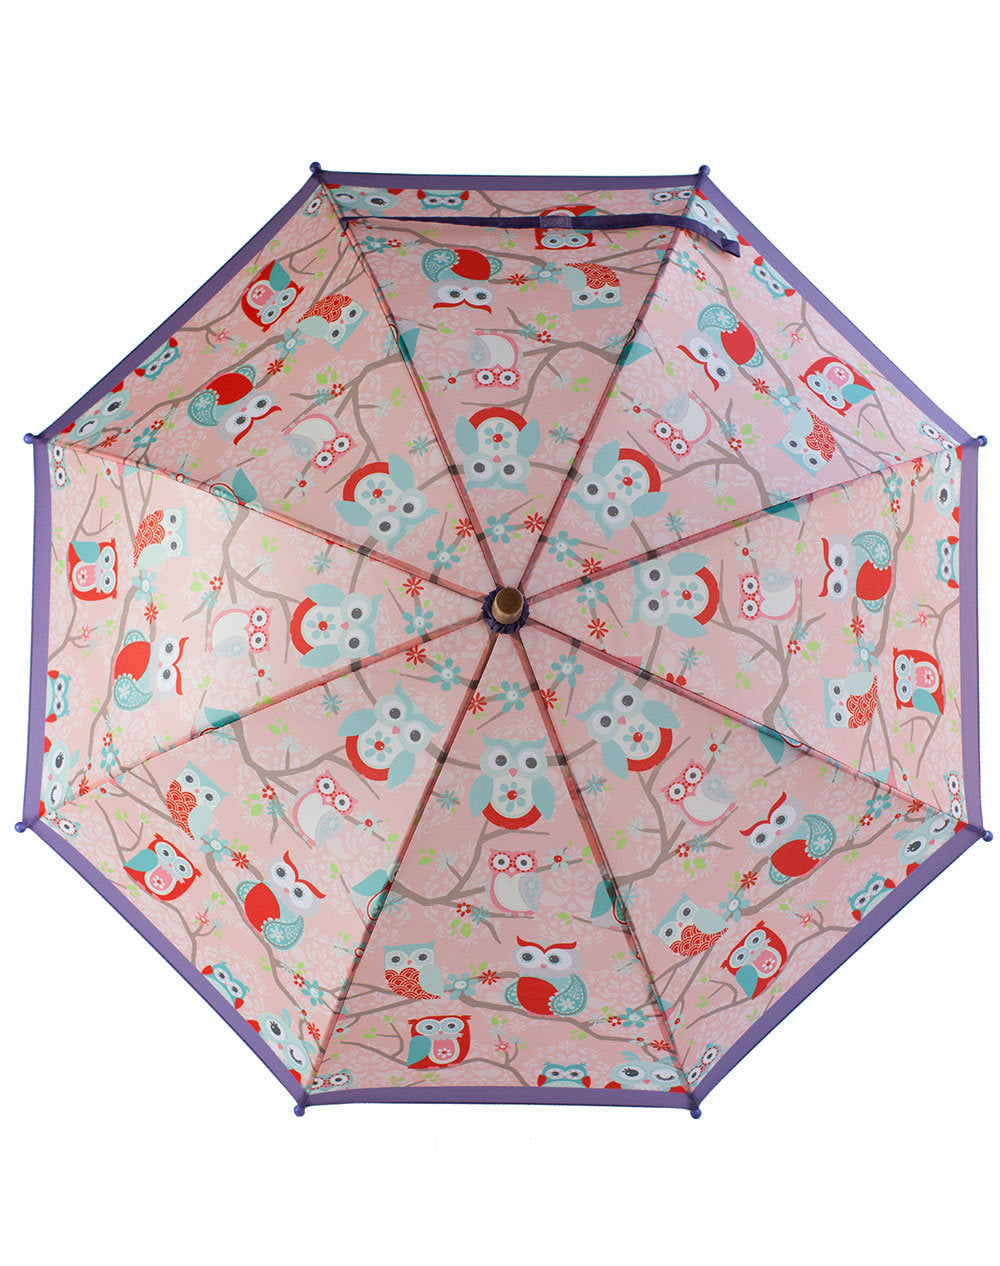 CLEARANCE: Perched Owls Children's Umbrella